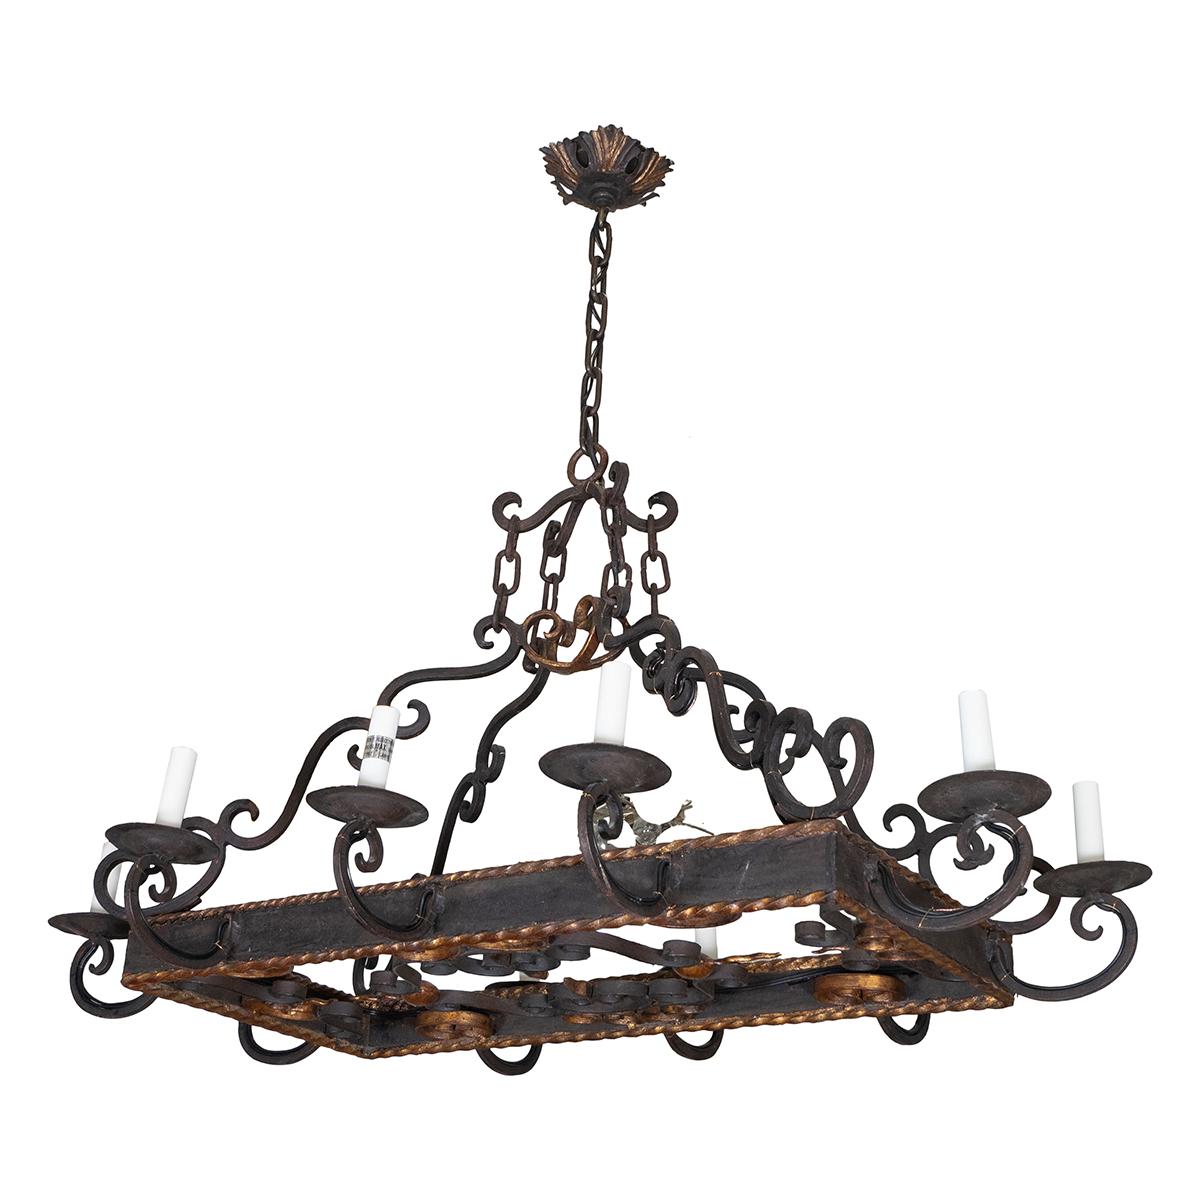 Rectangular wrought iron chandelier with golden twist trim details and original canopy.